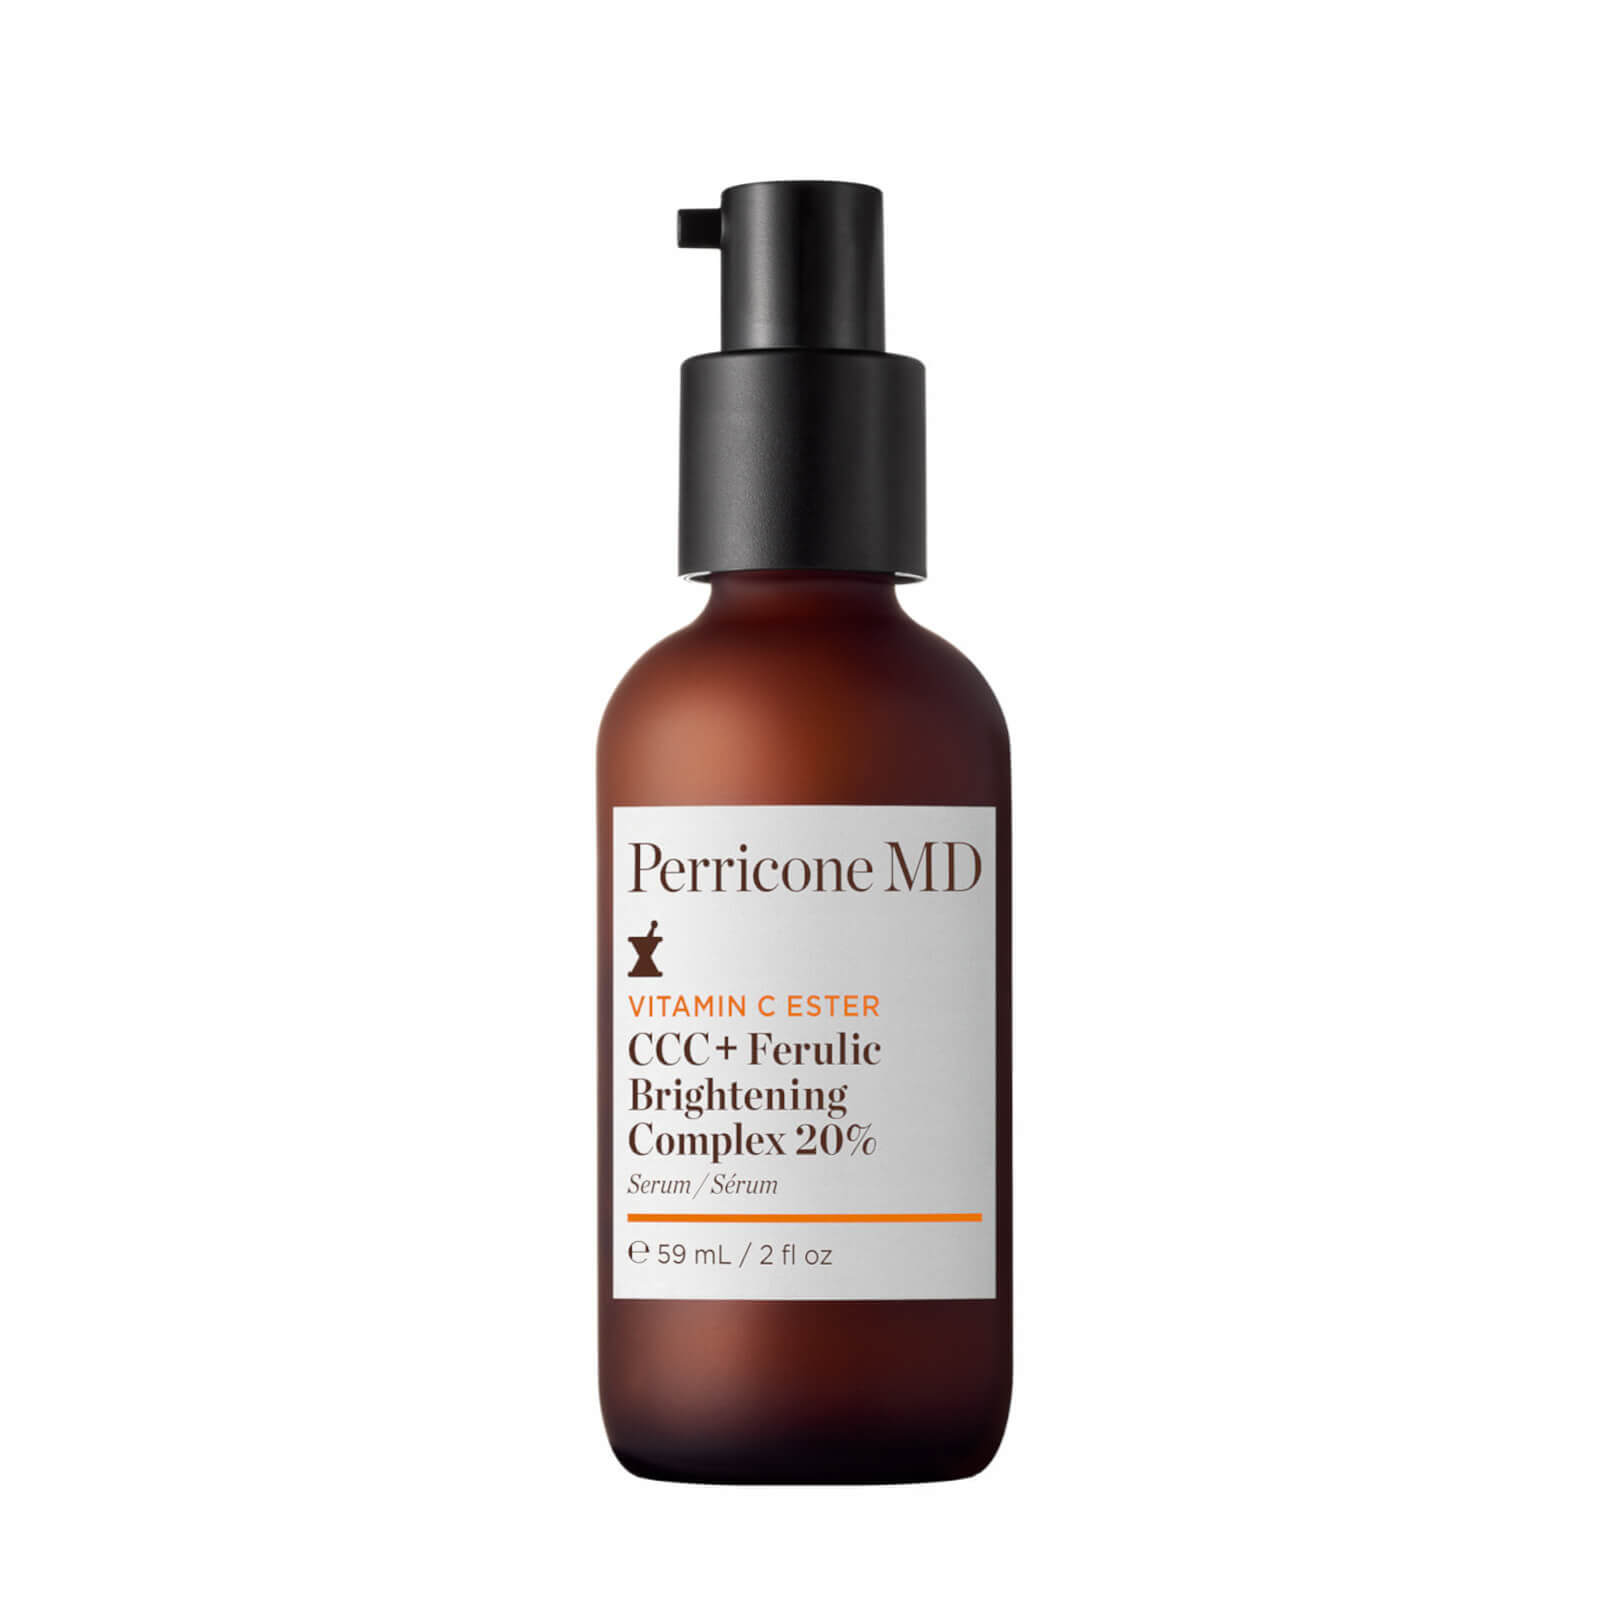 Perricone Md Vitamin C Ester Ccc + Ferulic Brightening Complex 20%